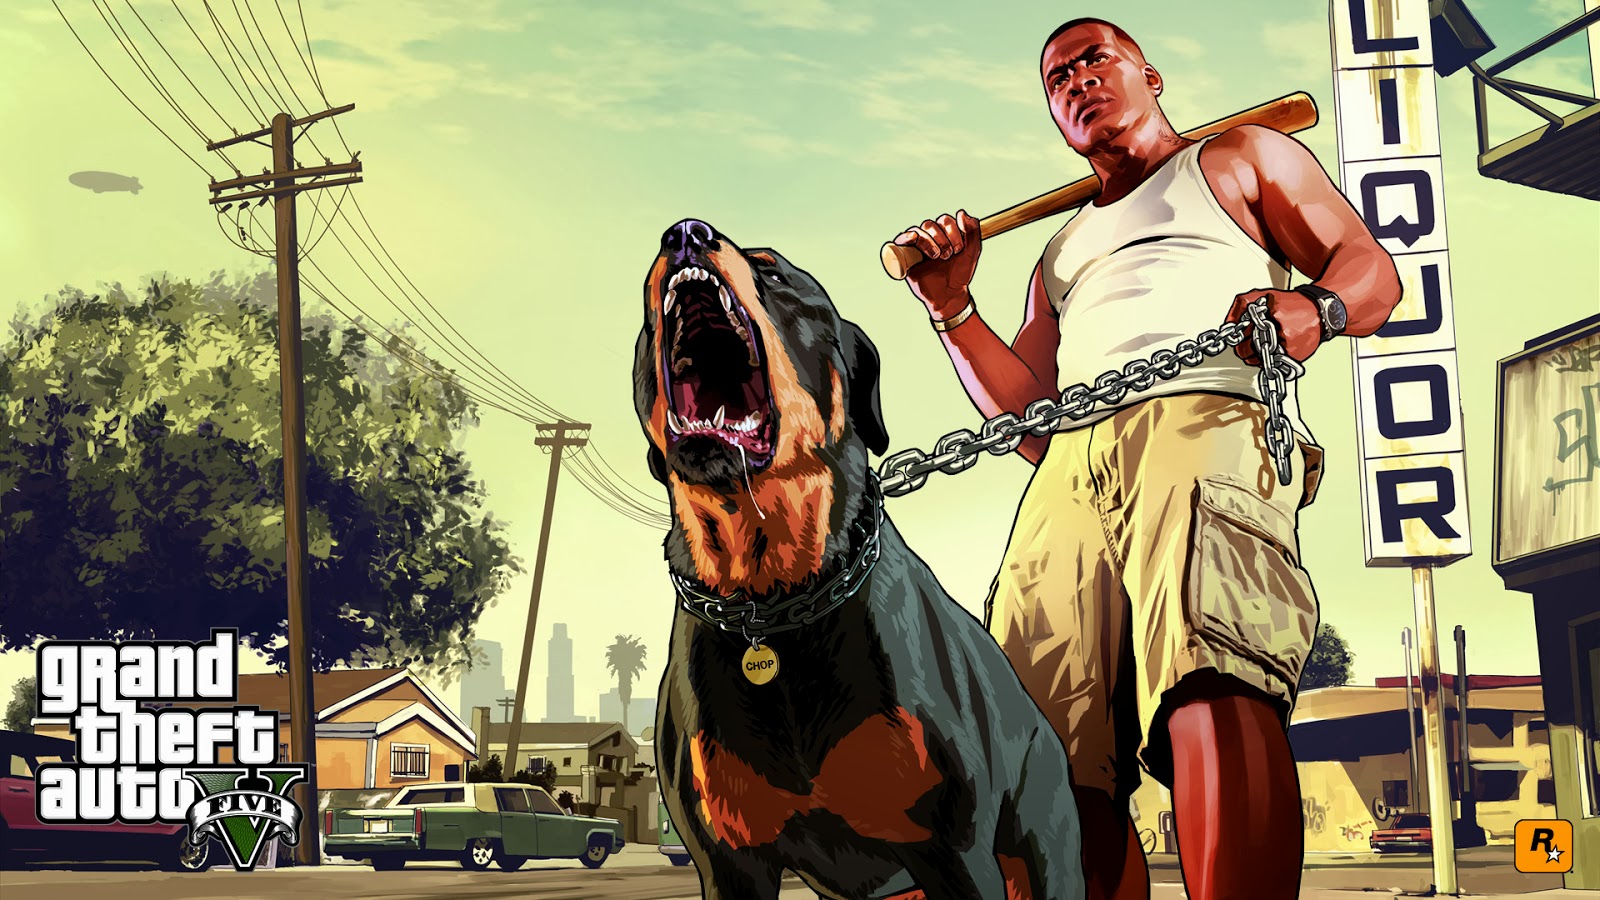 Gta V HD Wallpaper Top Game Grand Theft Auto Five Image